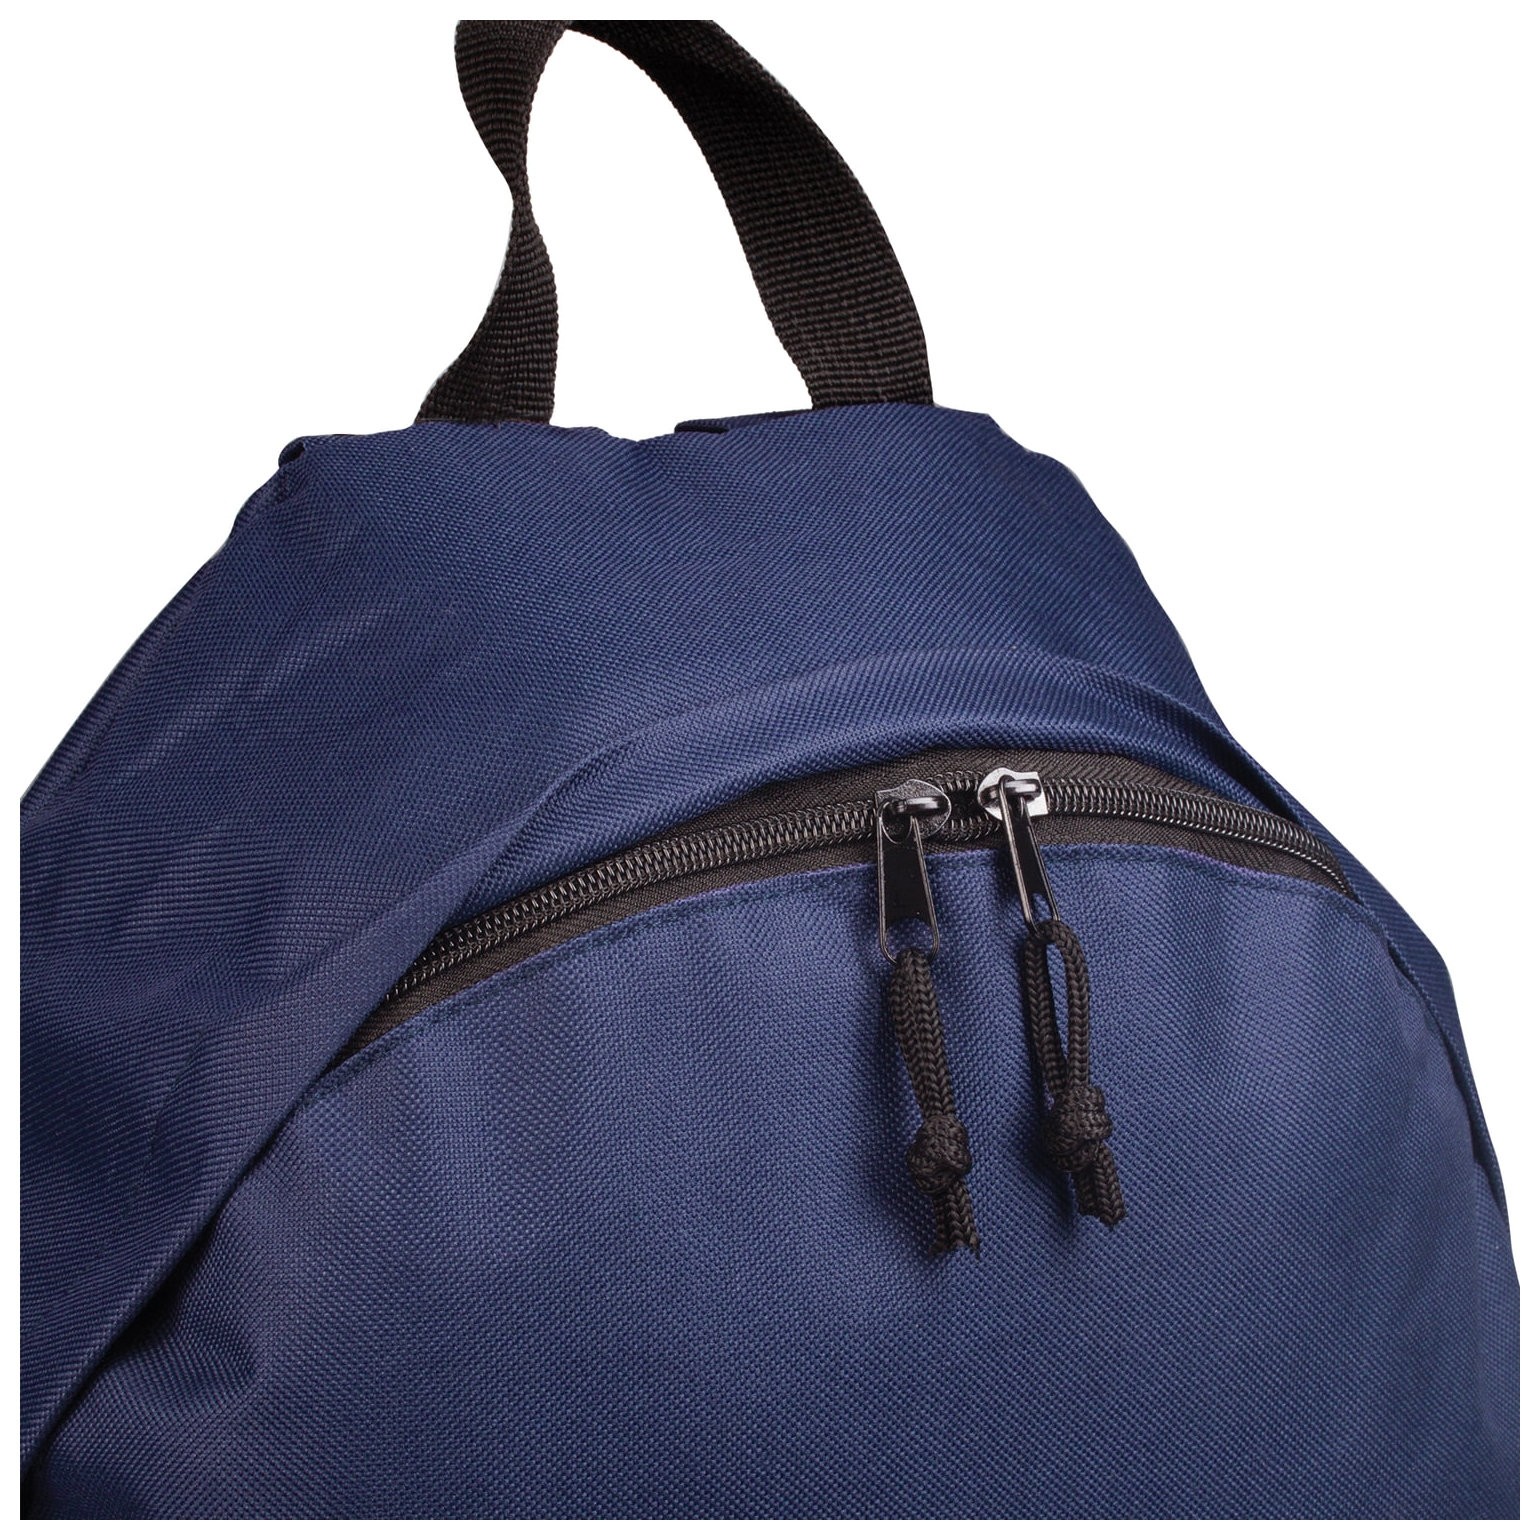 Рюкзак BRAUBERG, универсальный, сити-формат, один тон, синий, 20 литров, 41х32х14 см